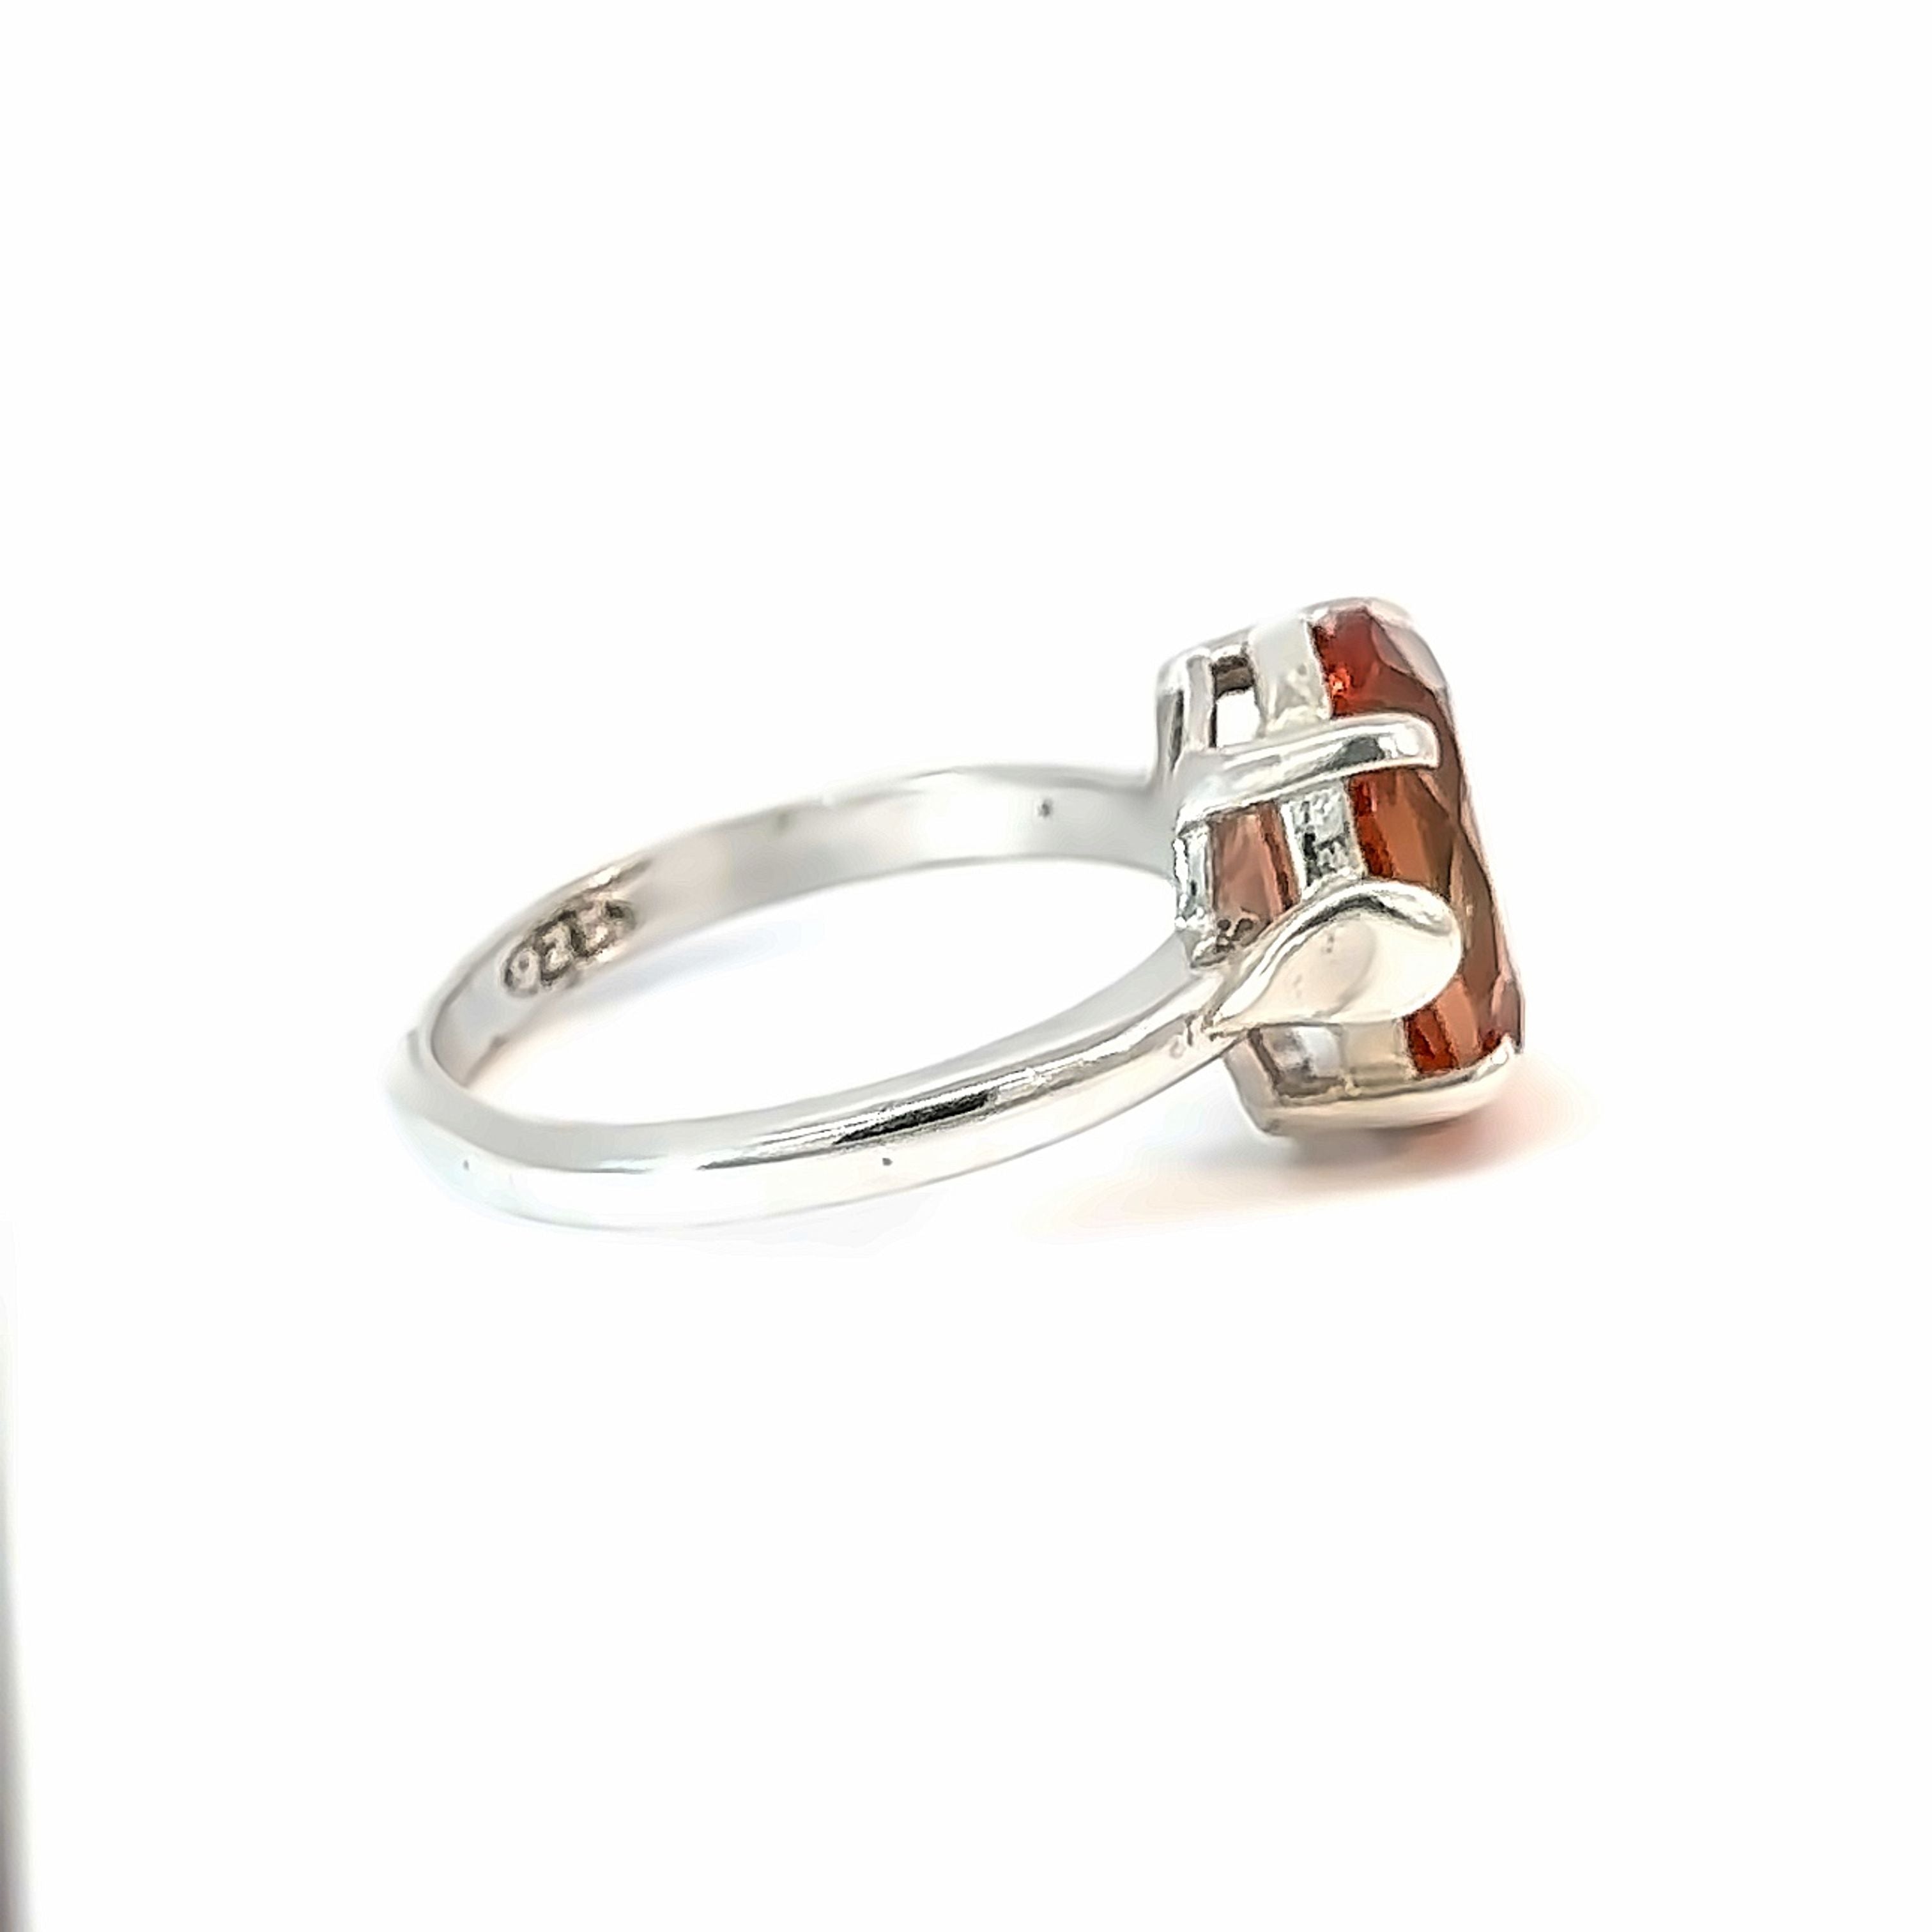 Men's Platinum Court Fit Wedding Ring, Narrow 3.7 mm, Size S.25, US 9.25. -  Addy's Vintage